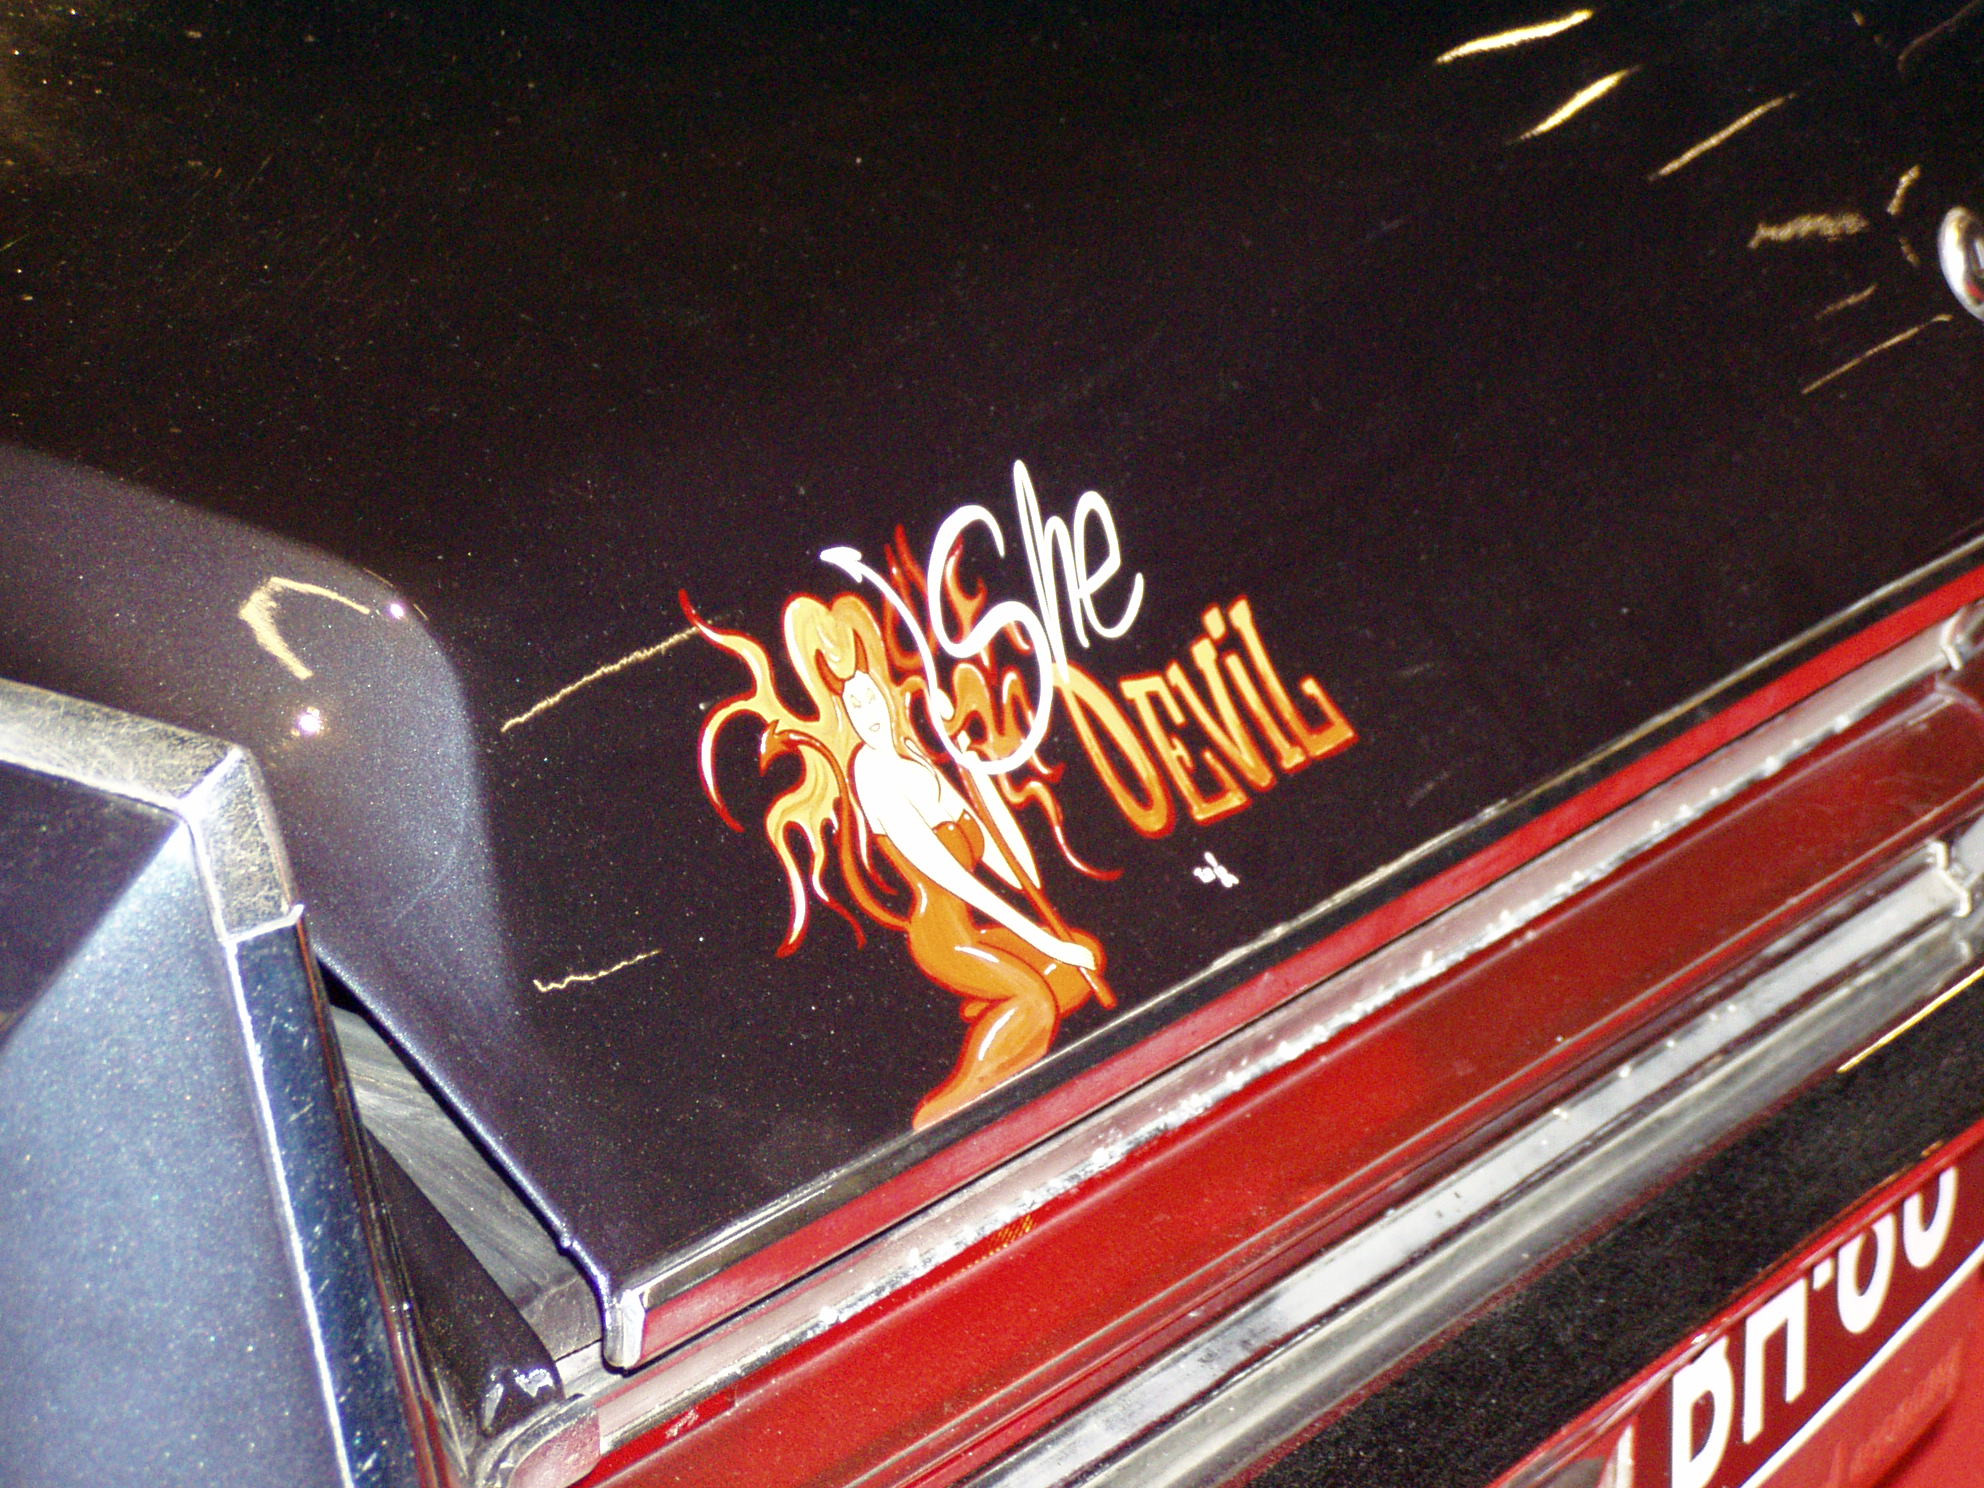 American Car Show 2005, She Devil